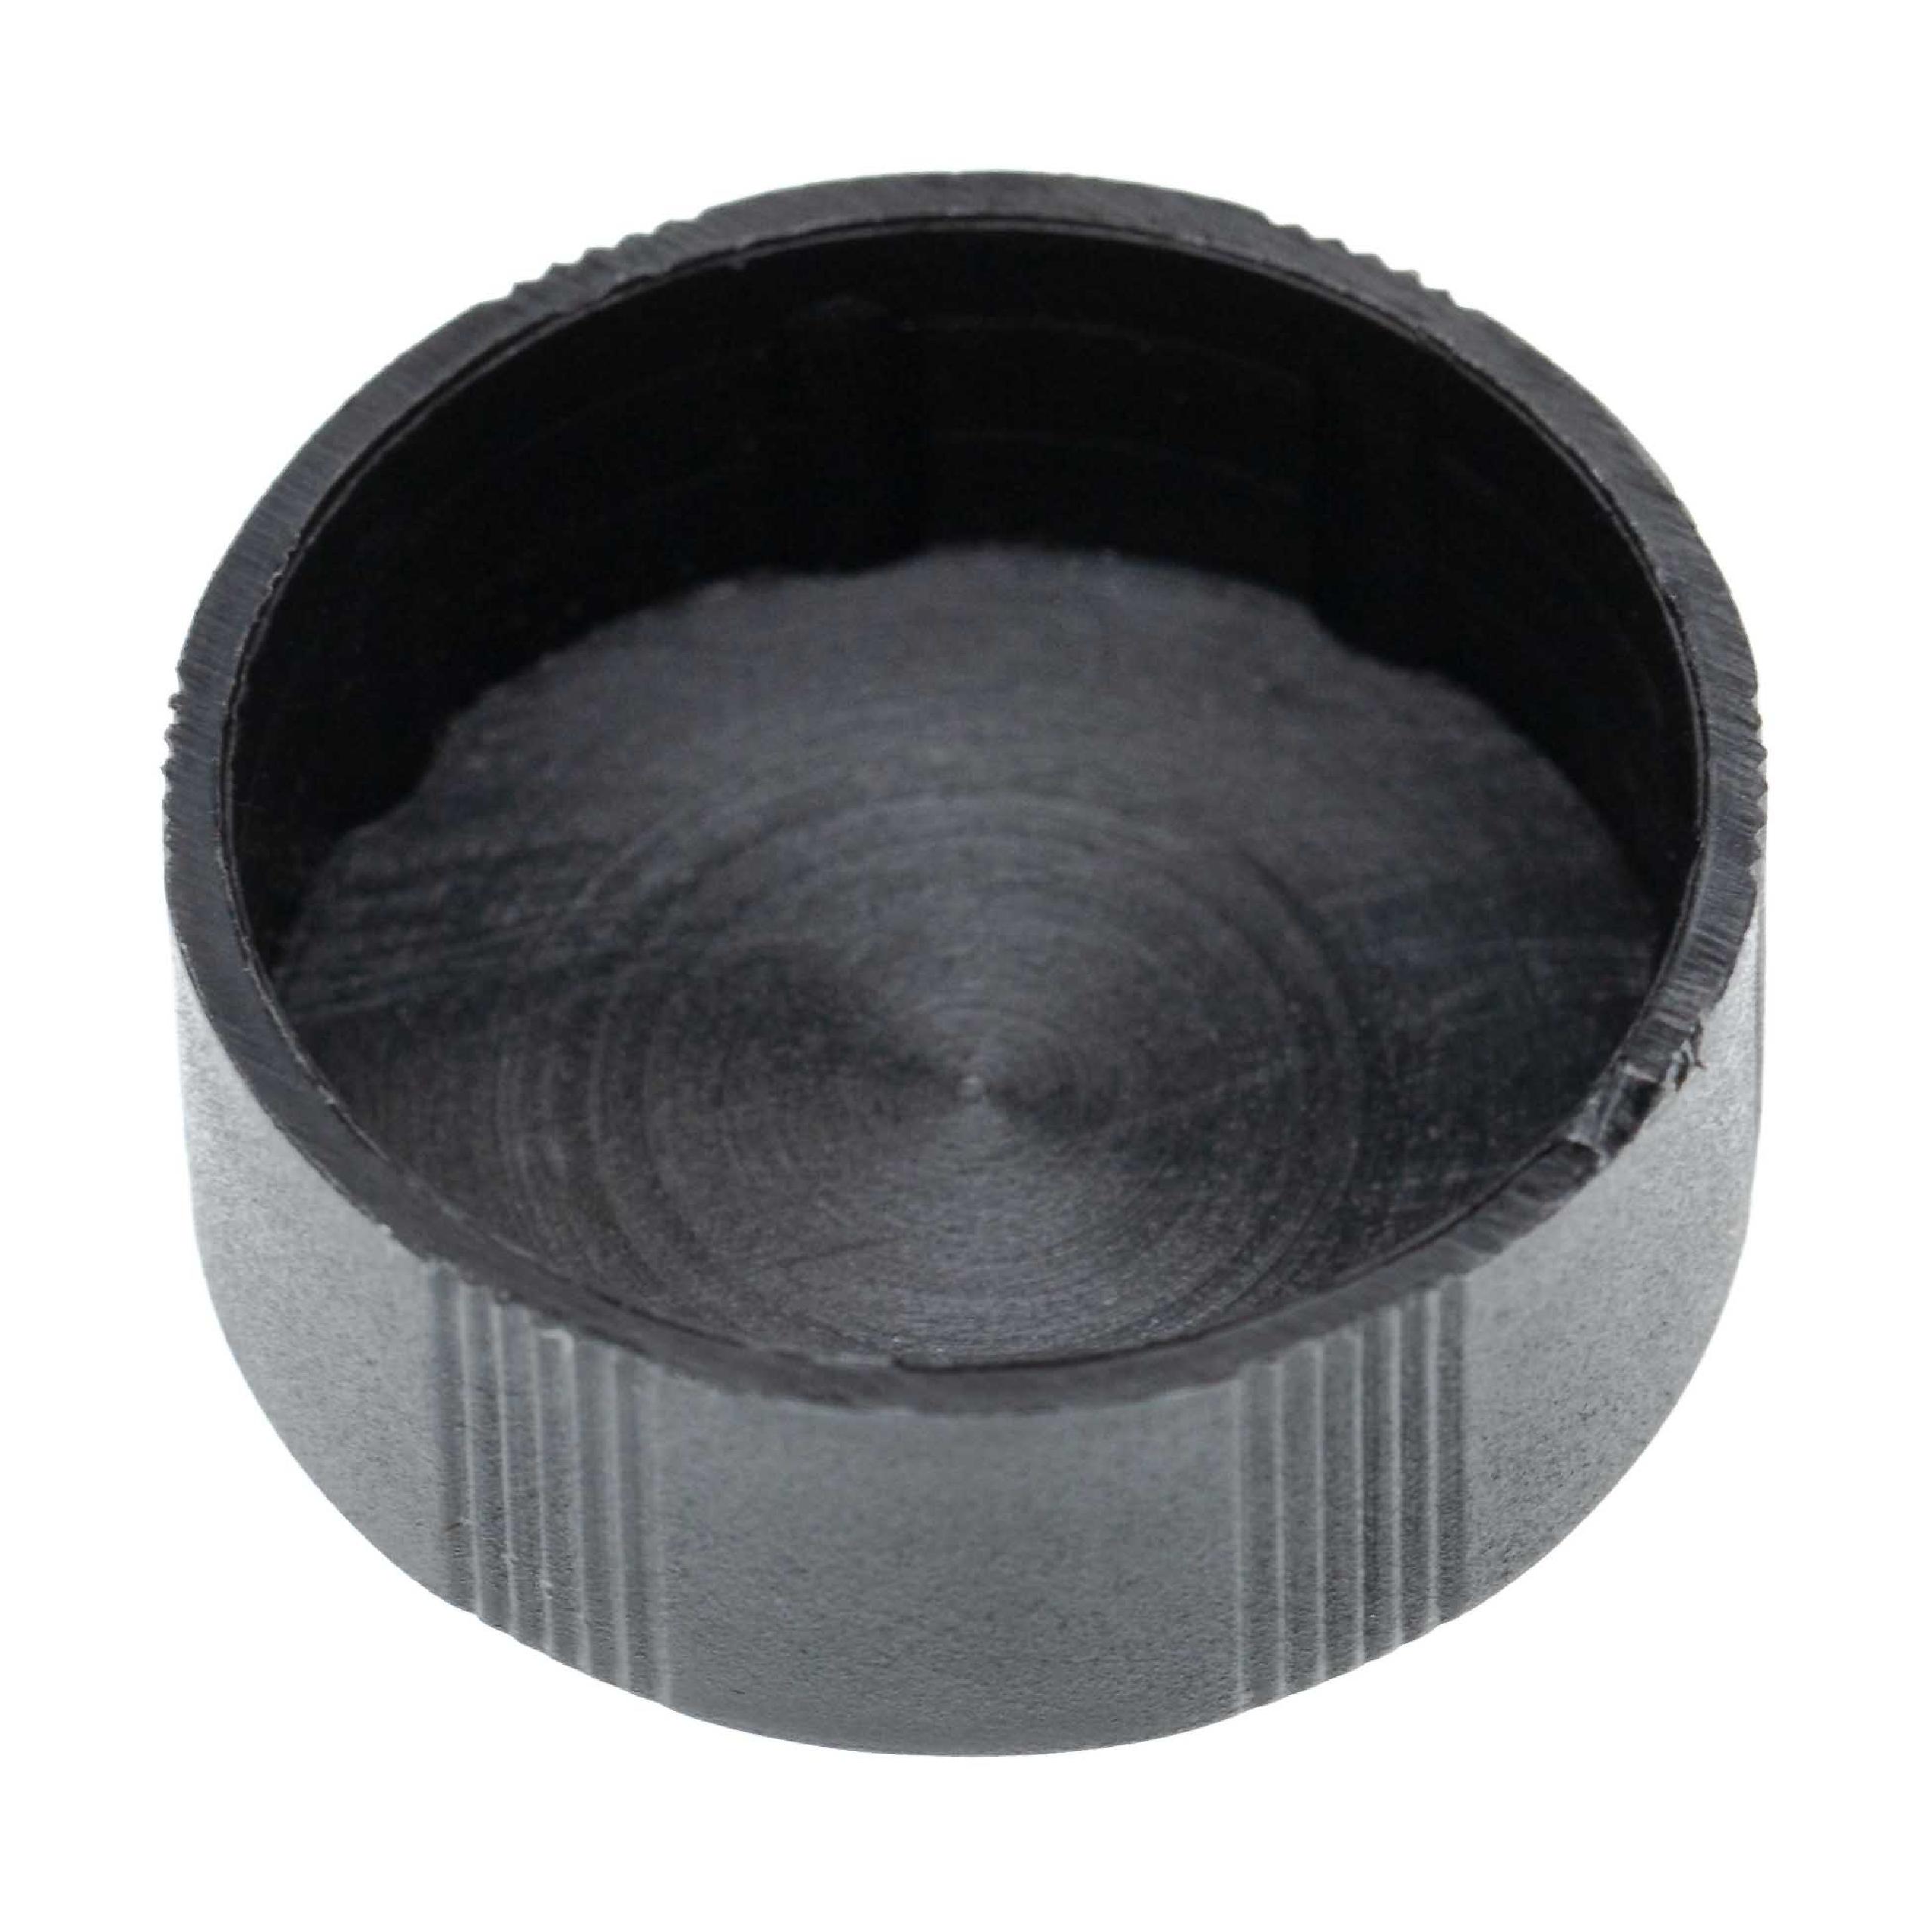 2x tapa objetivo para prismáticos con diámetro de 30 mm - negro, acoplable